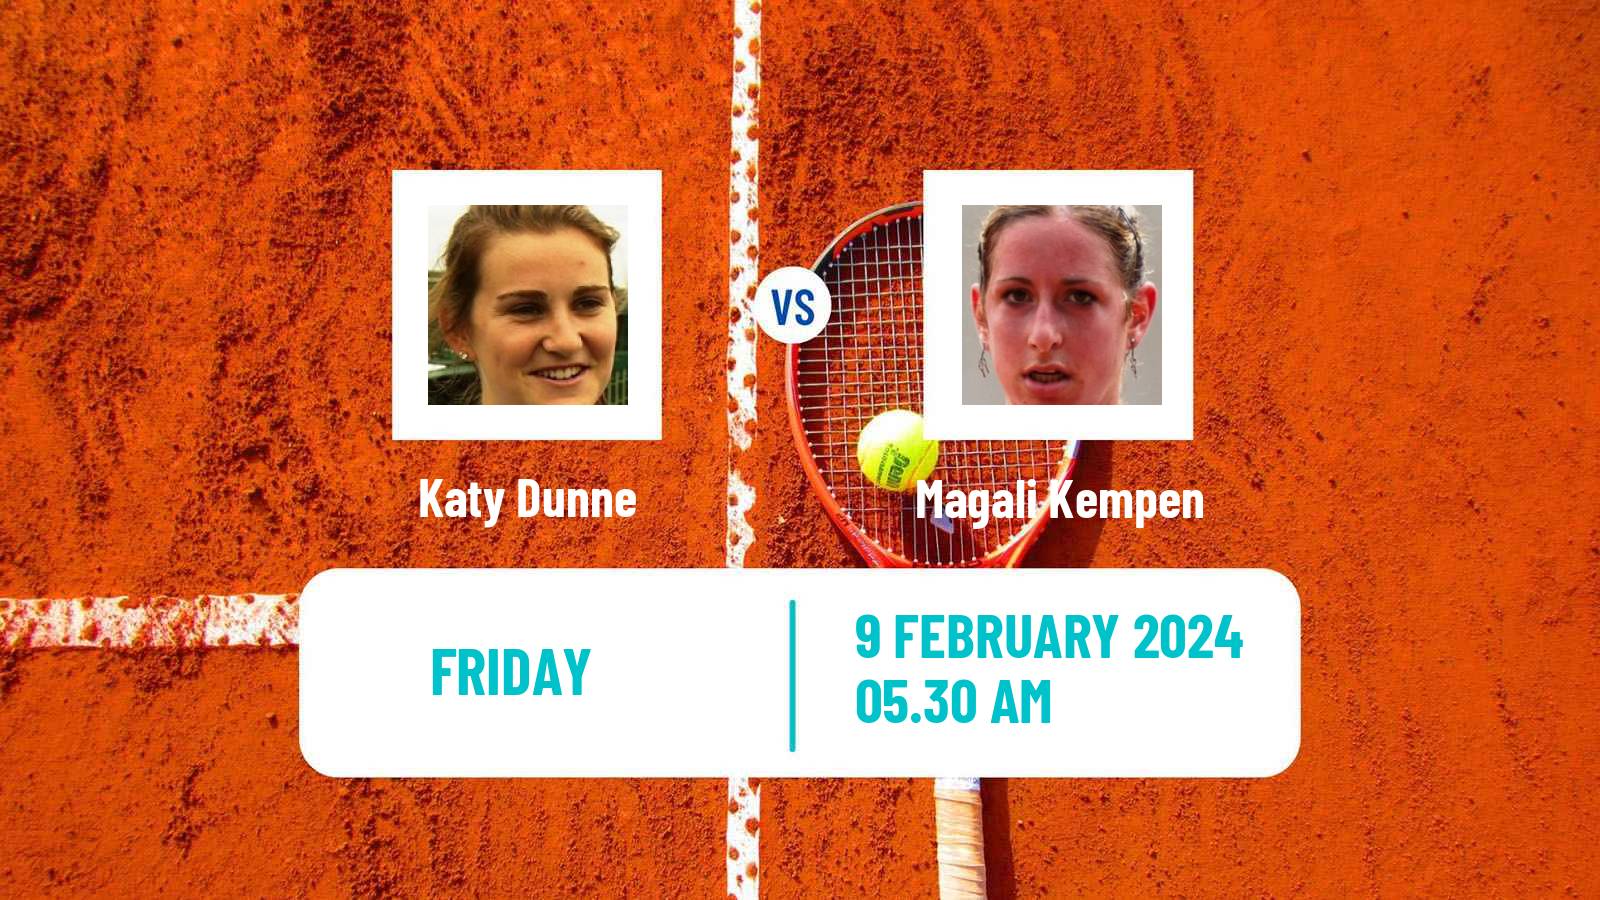 Tennis ITF W50 Edgbaston Women Katy Dunne - Magali Kempen